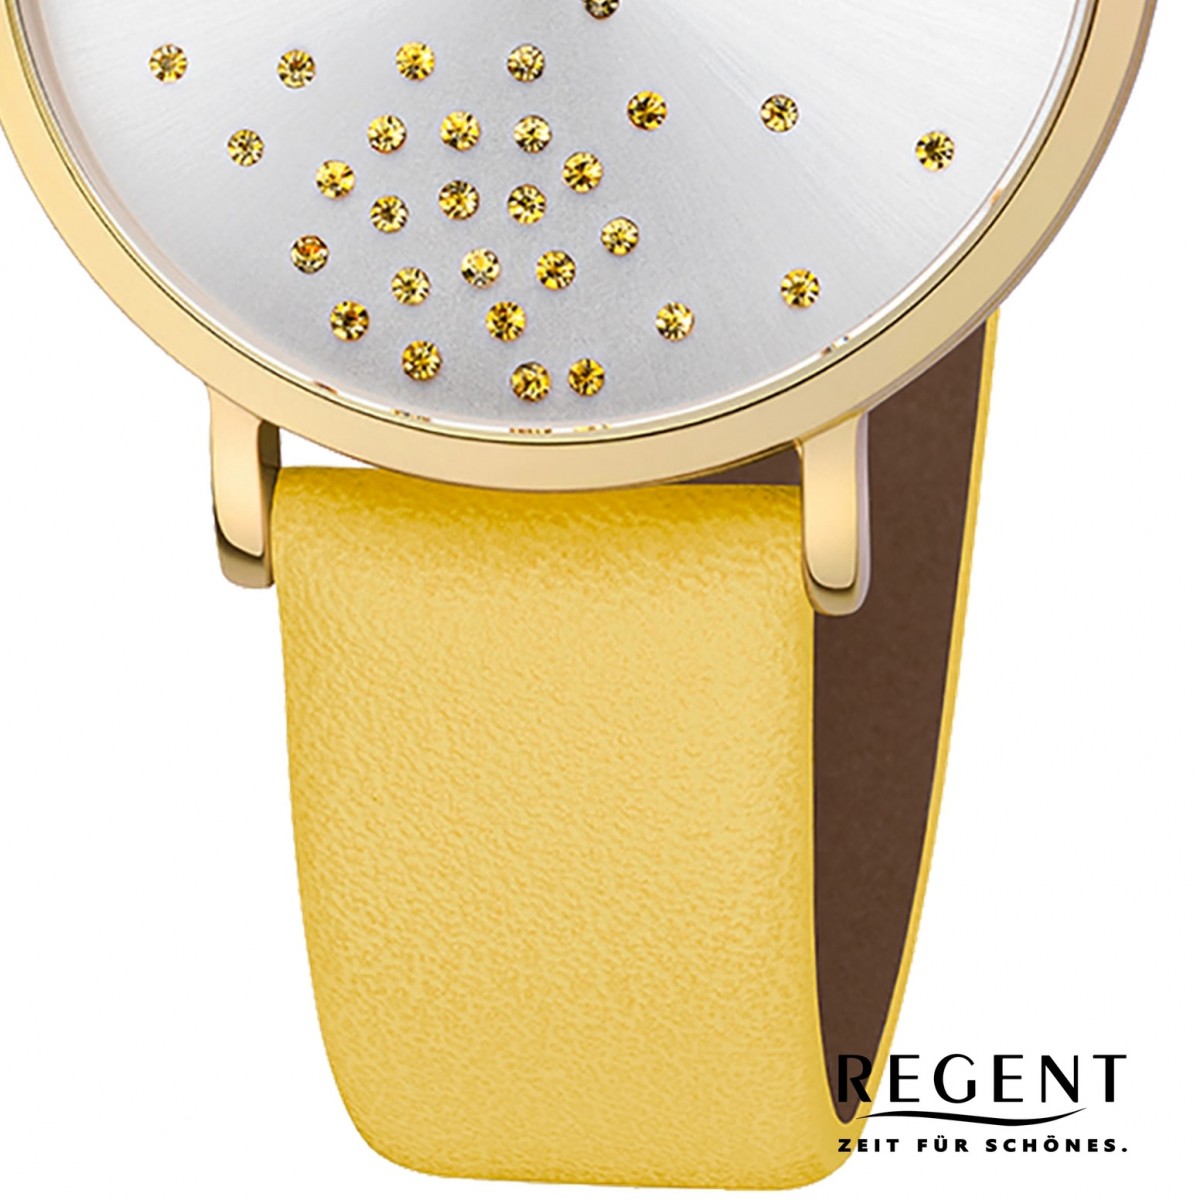 Analog BA-600 URBA600 Quarz-Uhr Damen Armbanduhr Regent gelb Leder